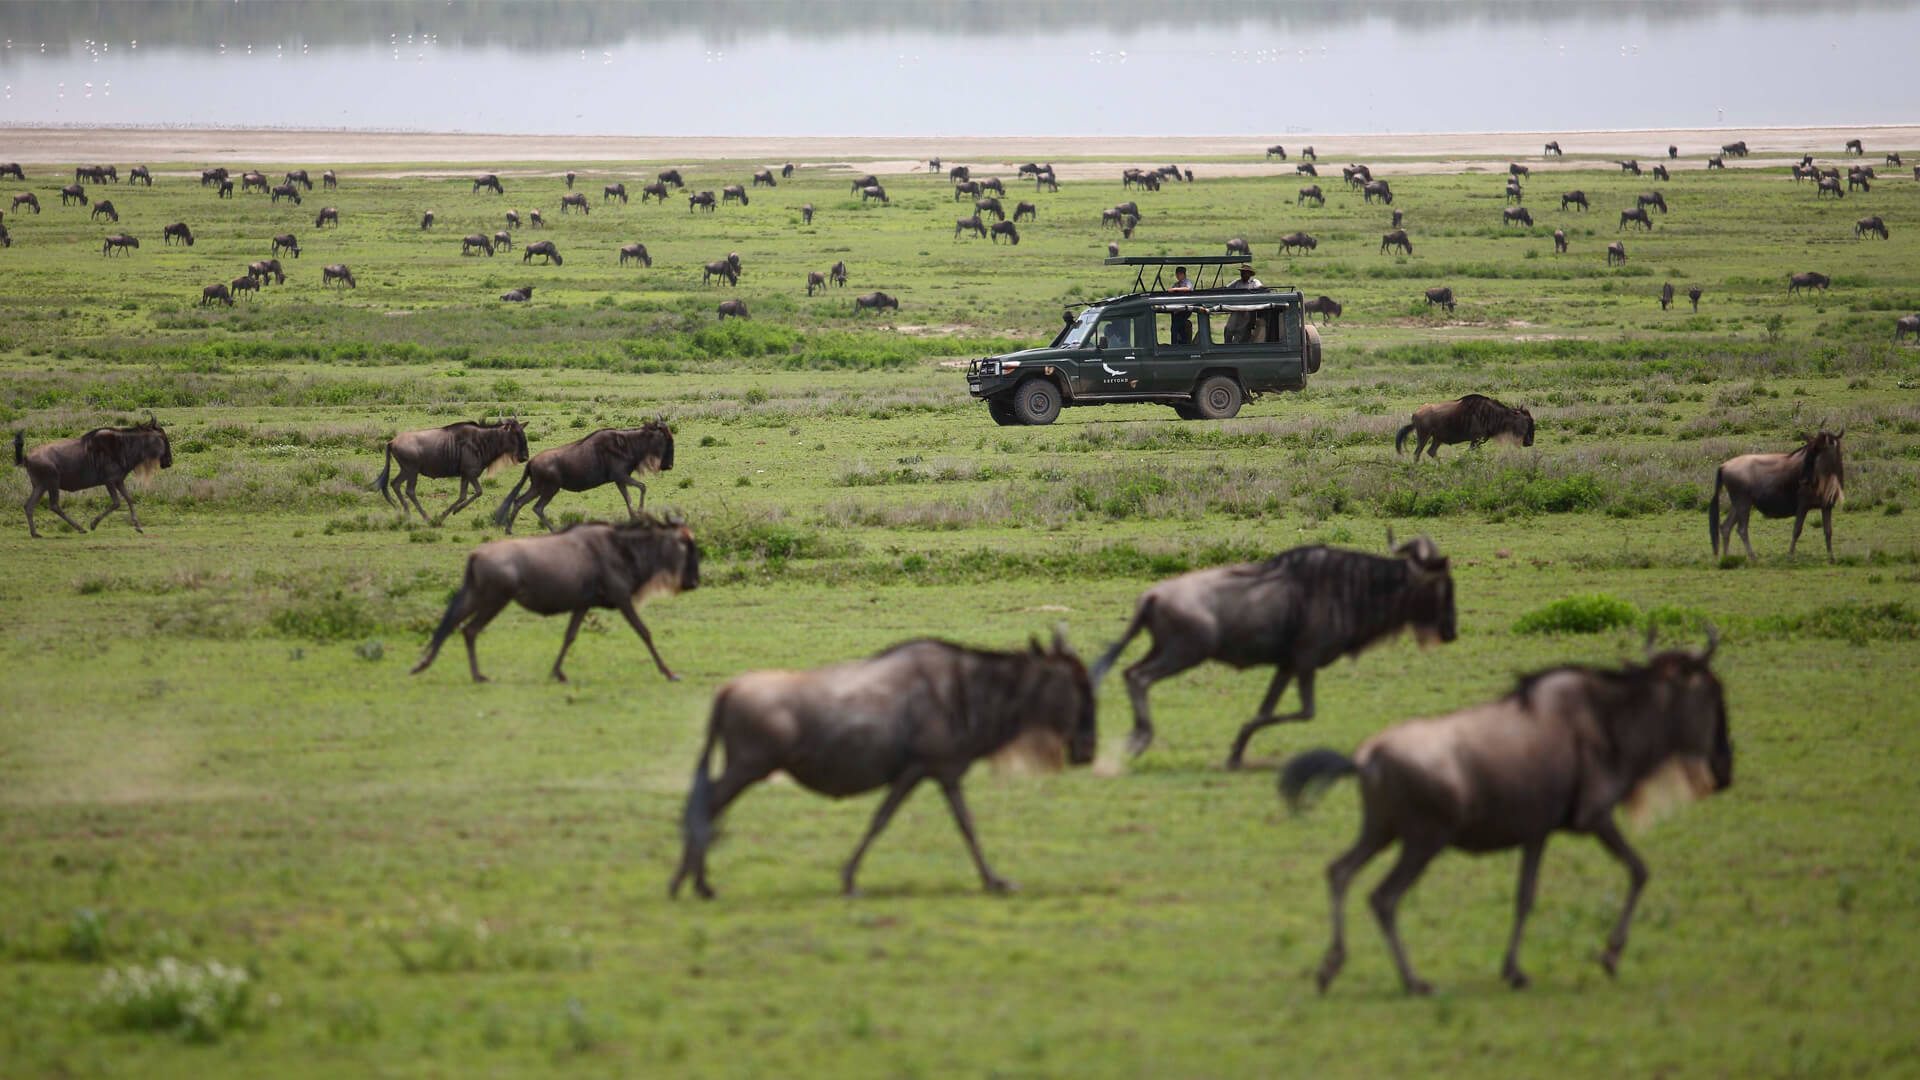 The Masai Mara National Reserve, Kenya